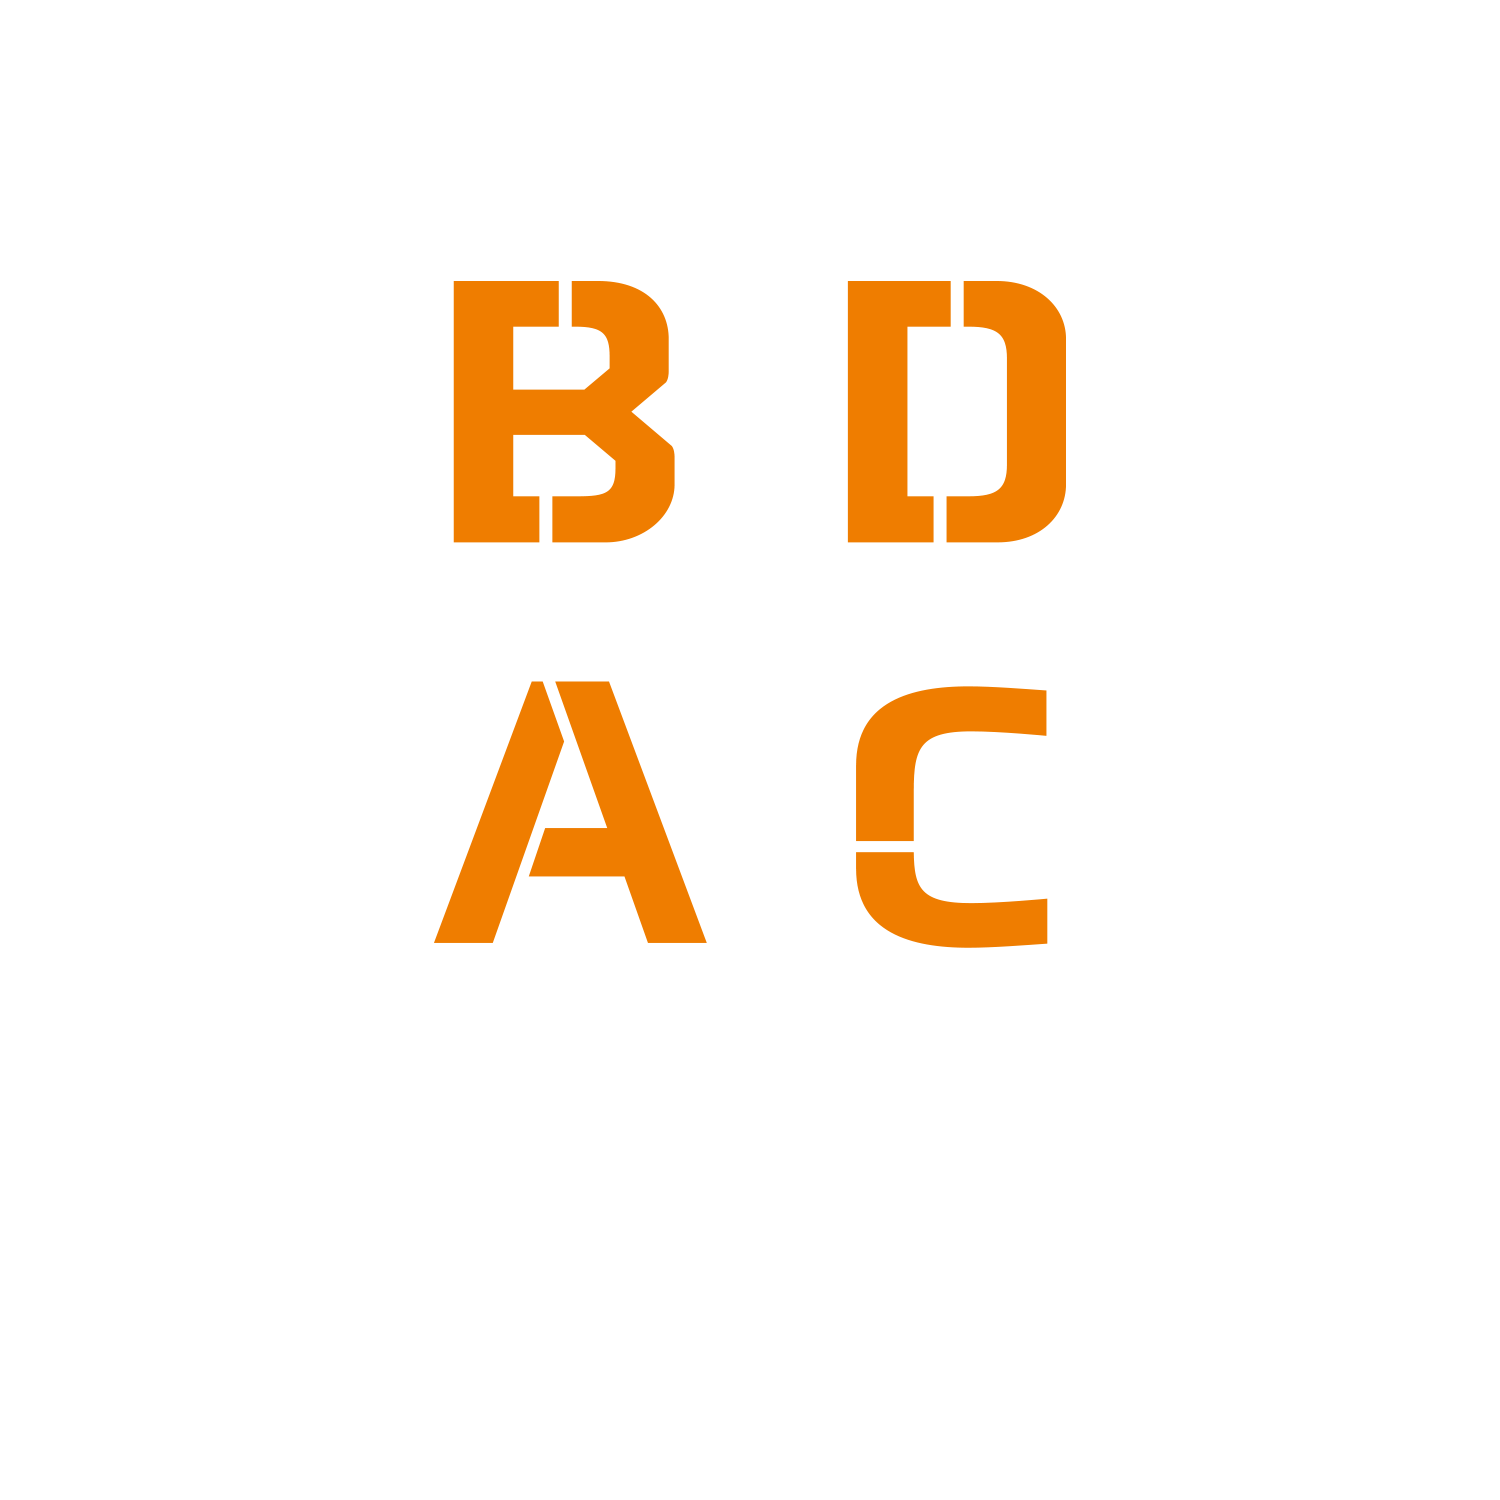 BDAC_Entreprenadtjanst_logo_staende_negativ